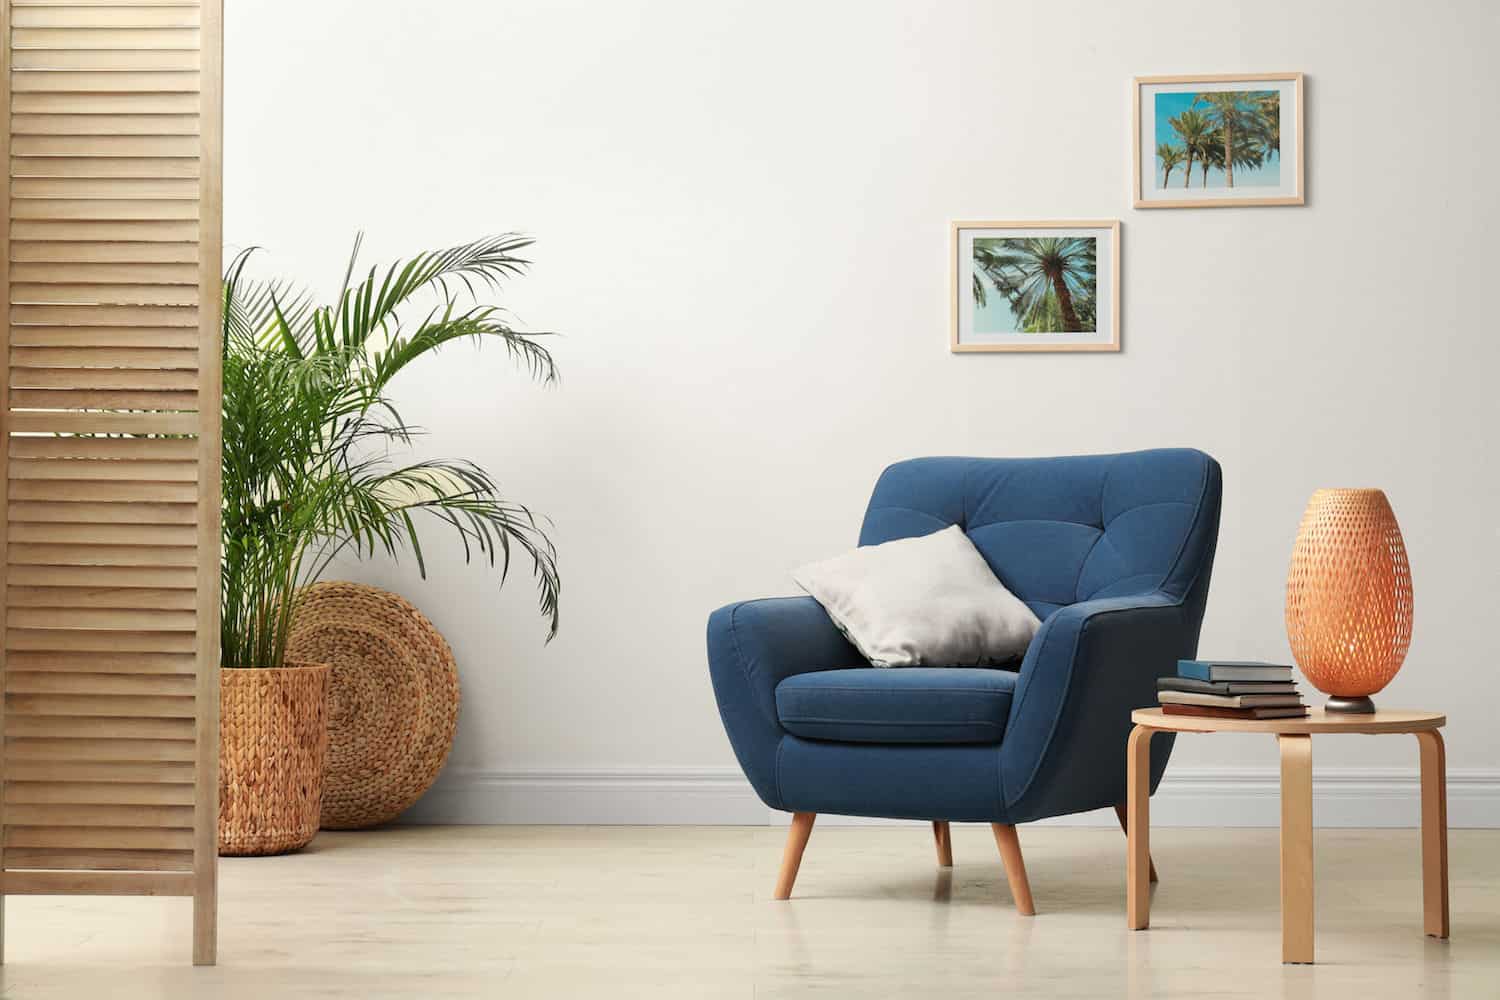 https://www.foamorder.com/img/products/indoor-seat/indoor-seat-cushion.jpg